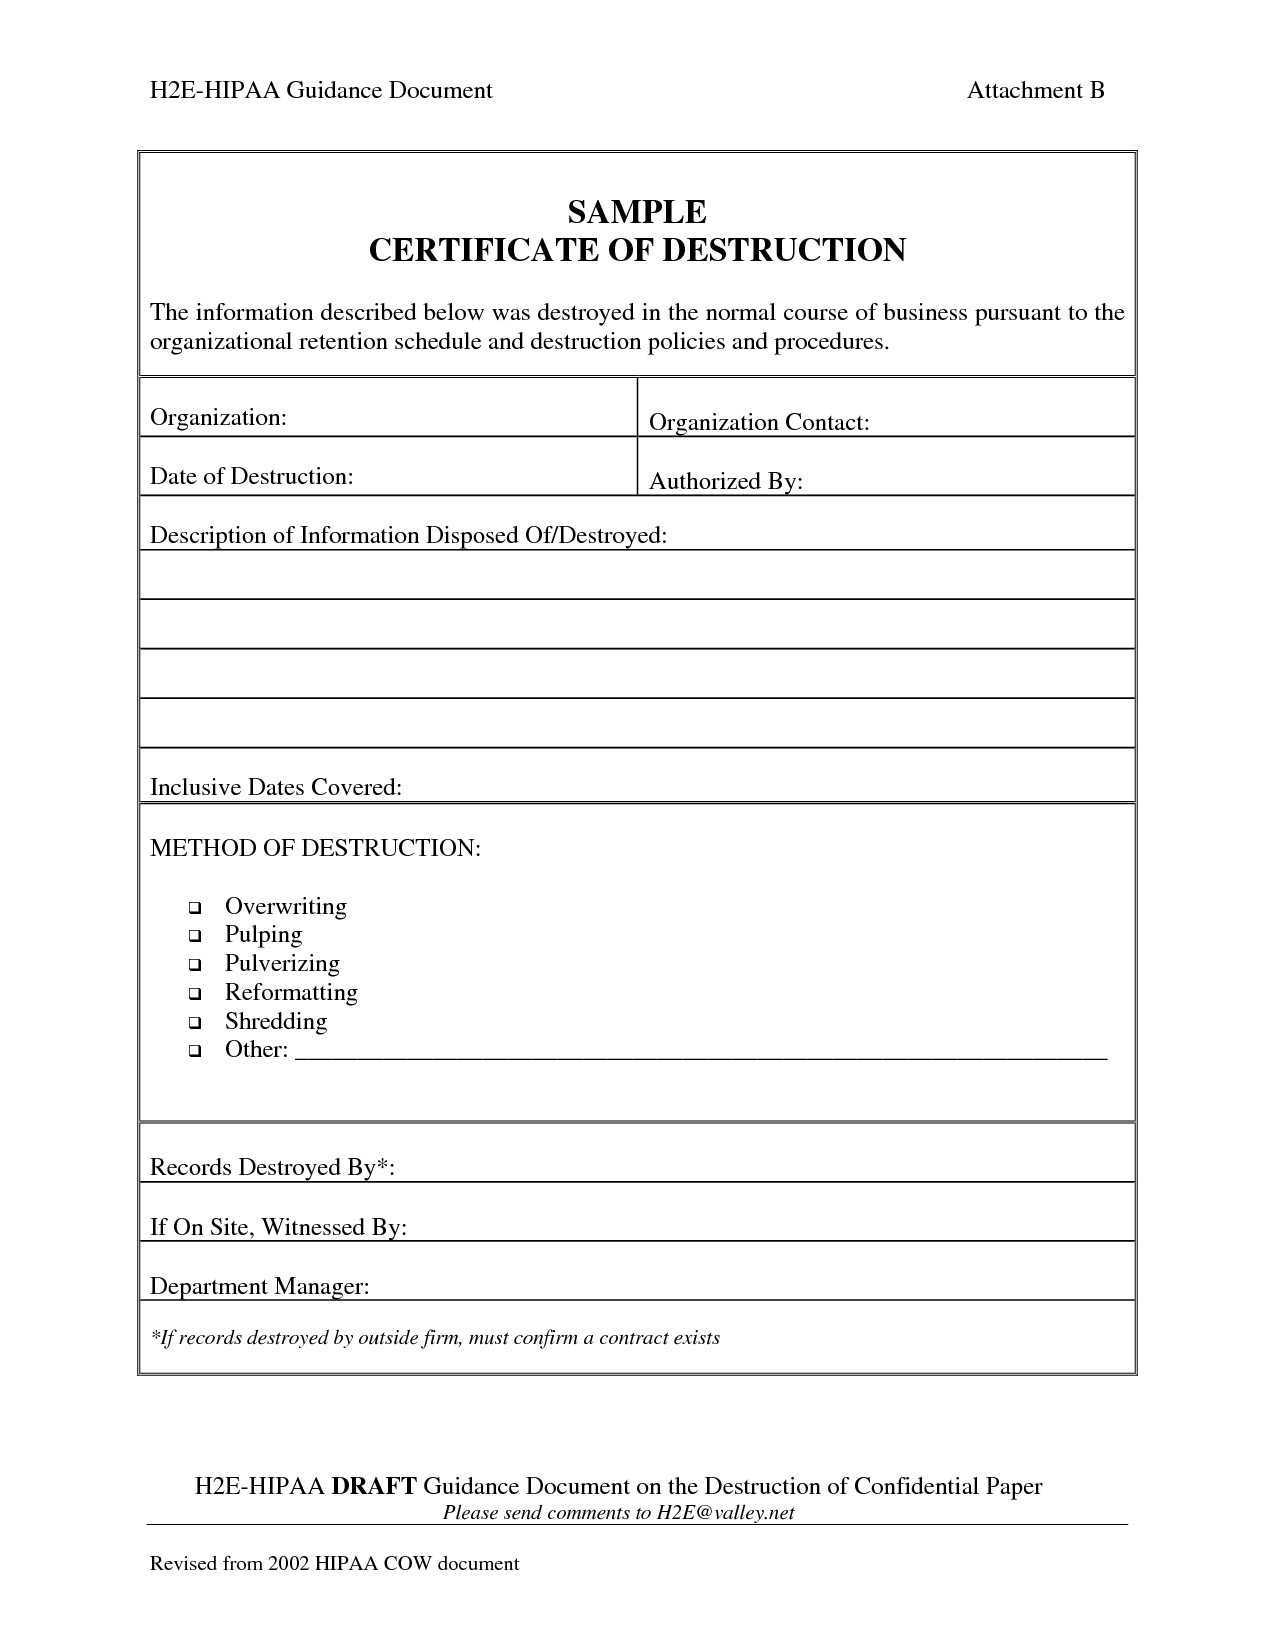 Certificate Of Destruction Template | Anti Grav Regarding Destruction Certificate Template